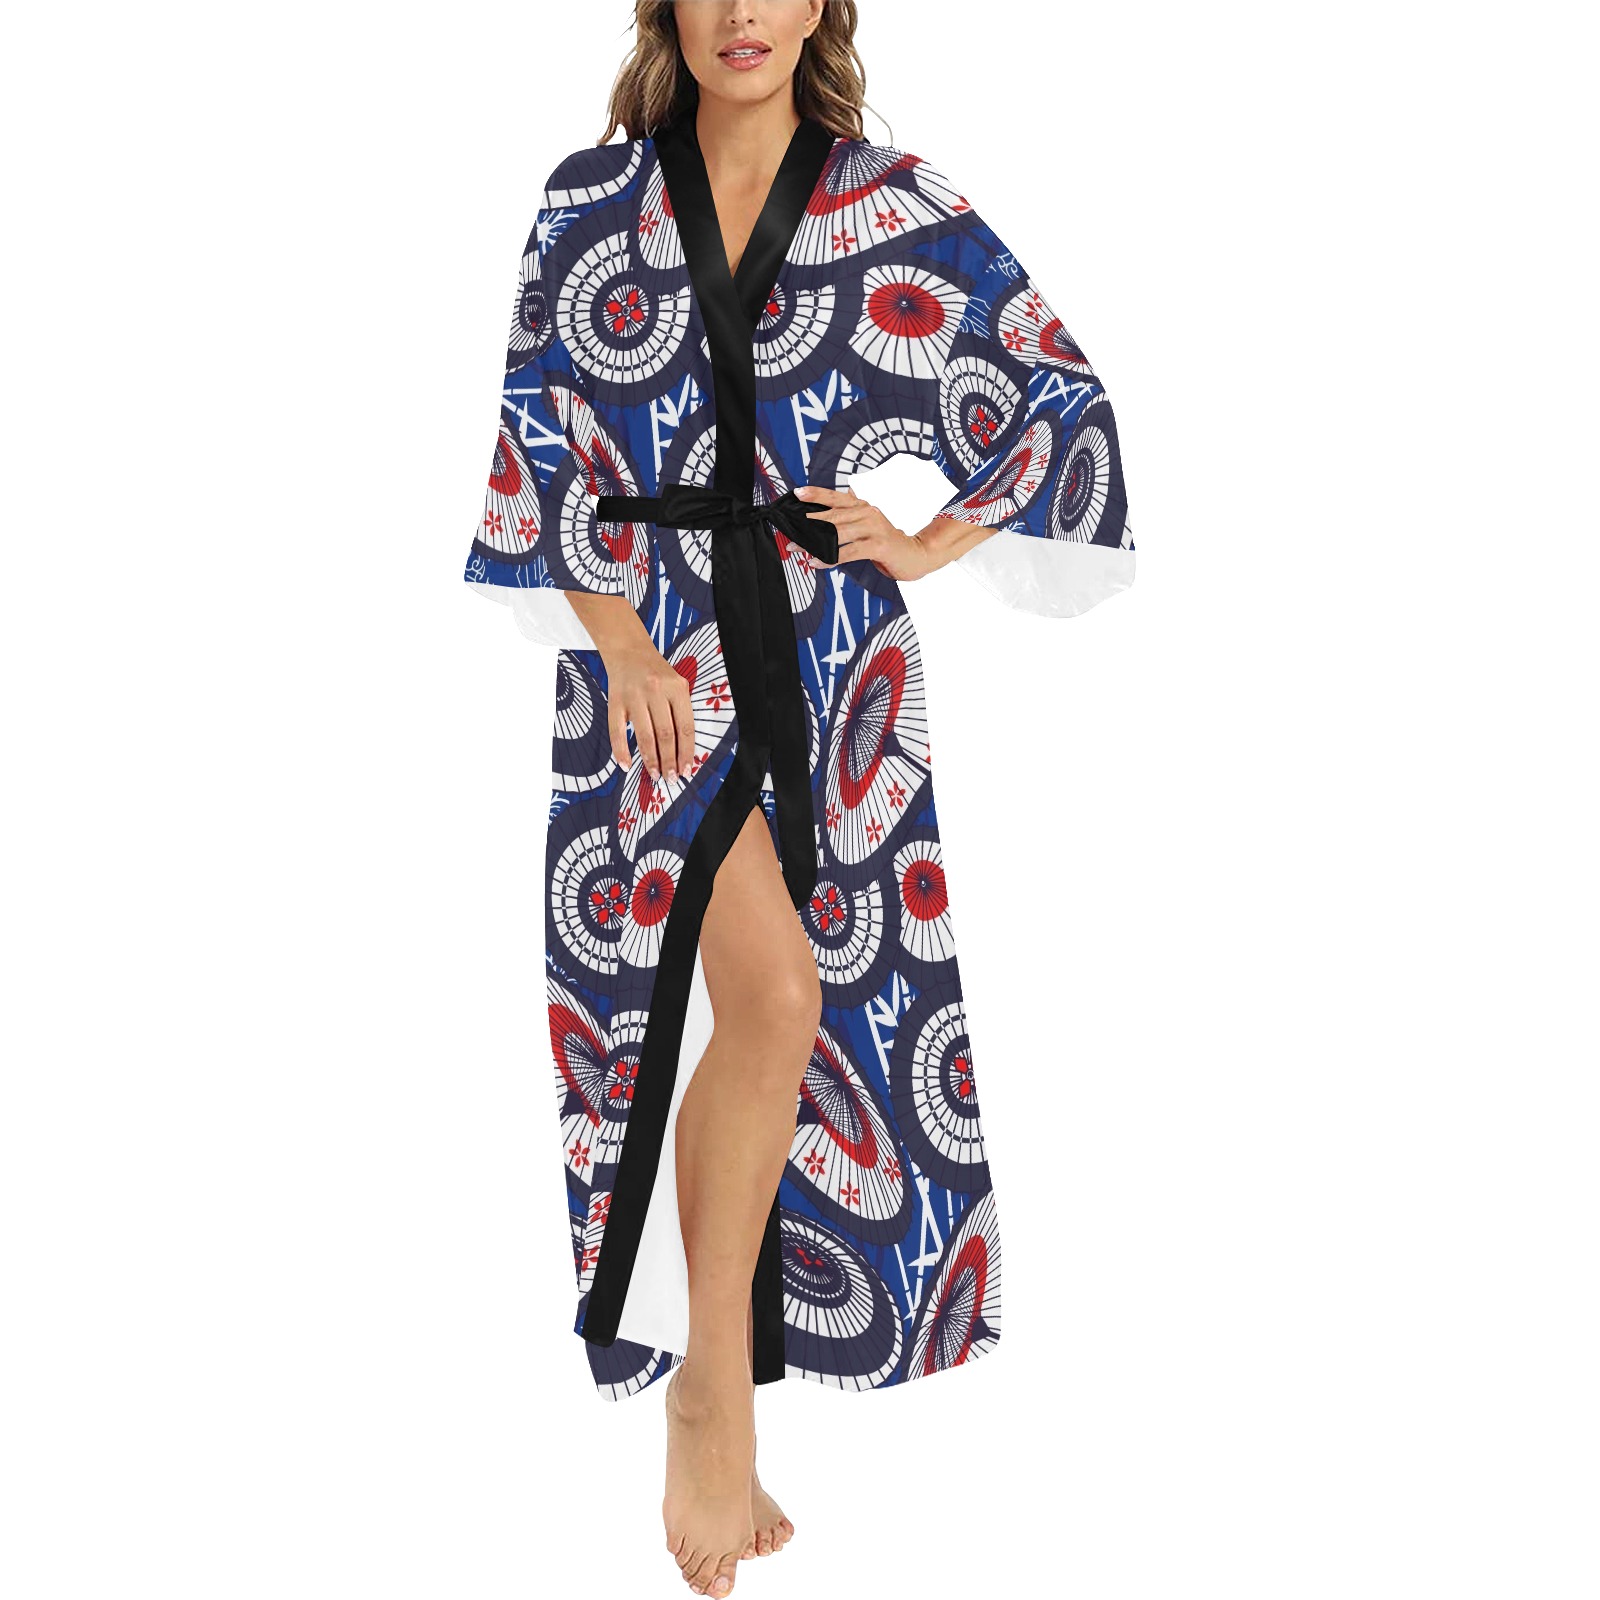 UMBRELLA 0001 Long Kimono Robe